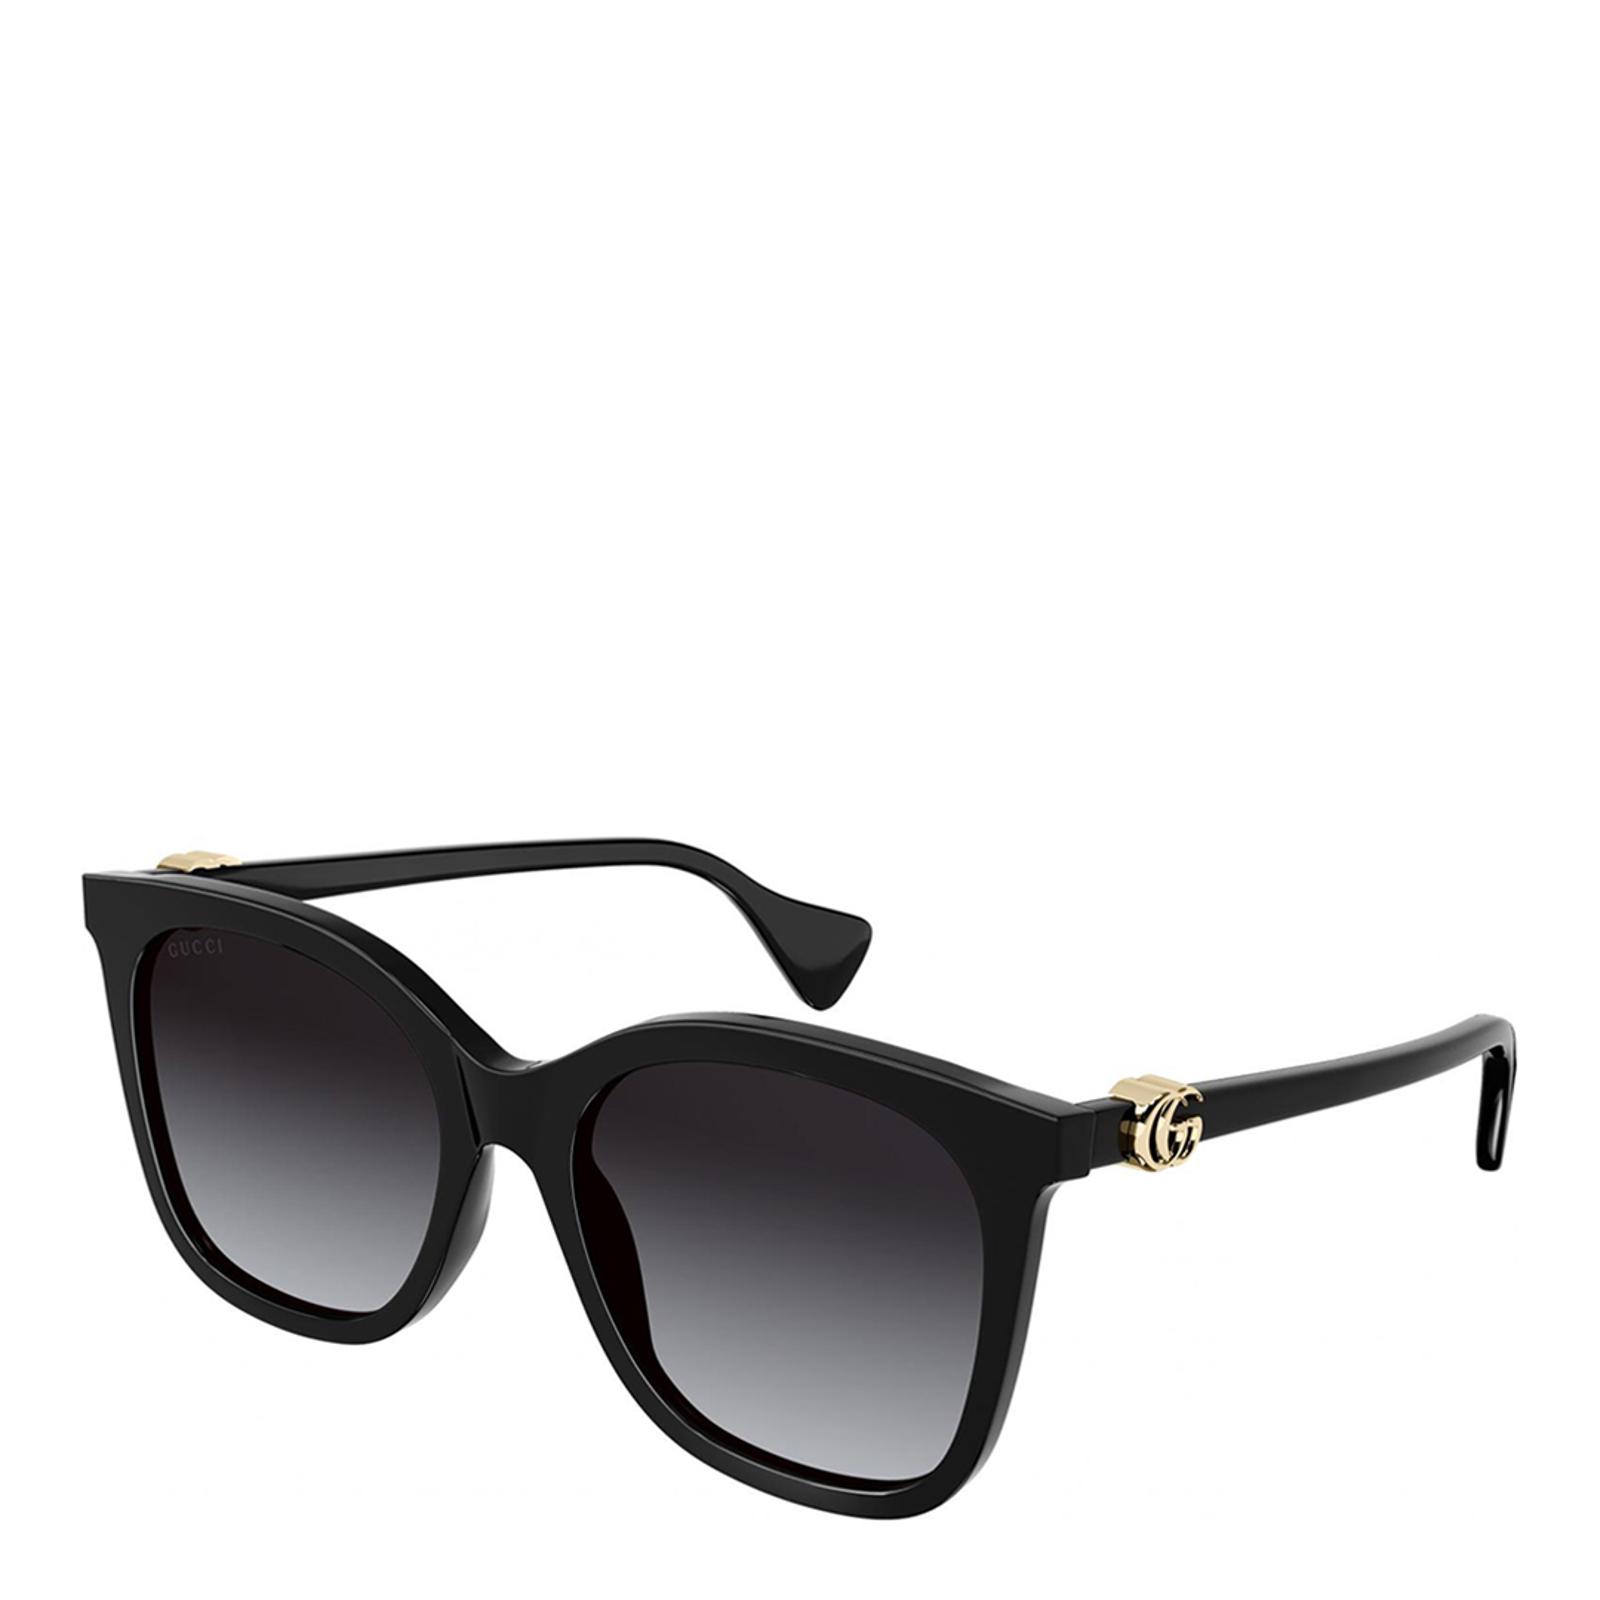 Women's Black Gucci Sunglasses 55mm - BrandAlley